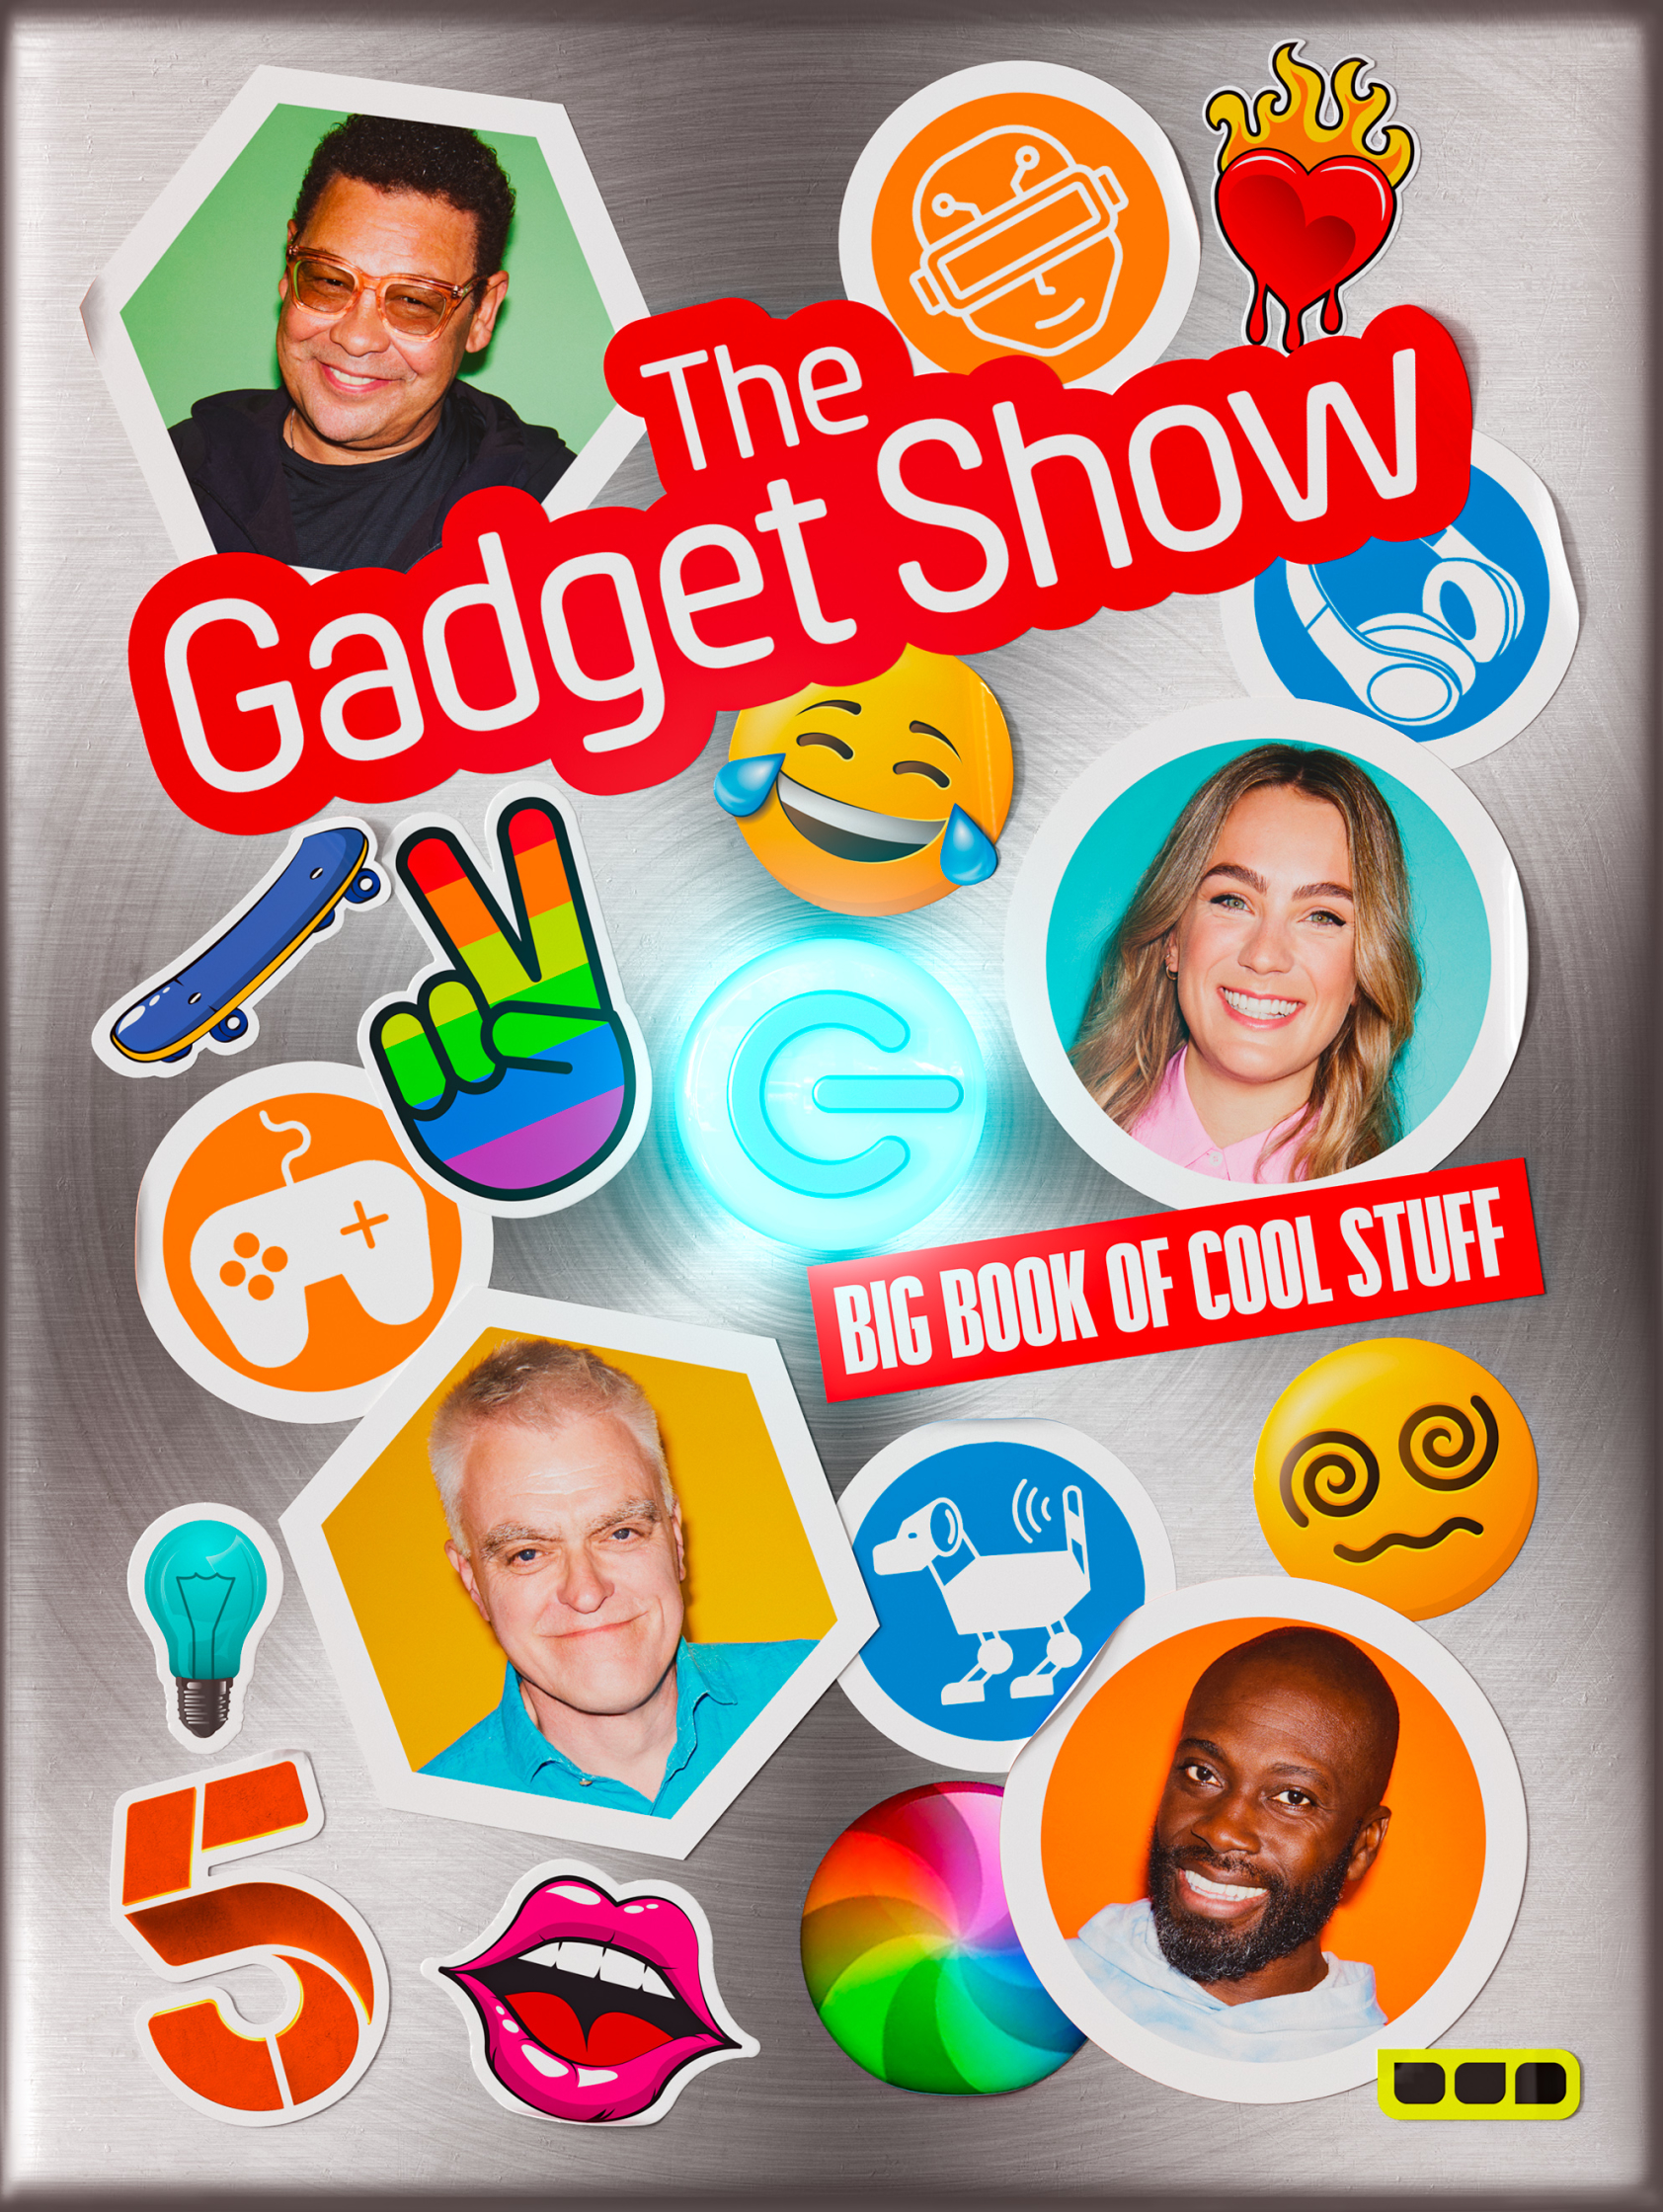 Gadget Show cover.jpg